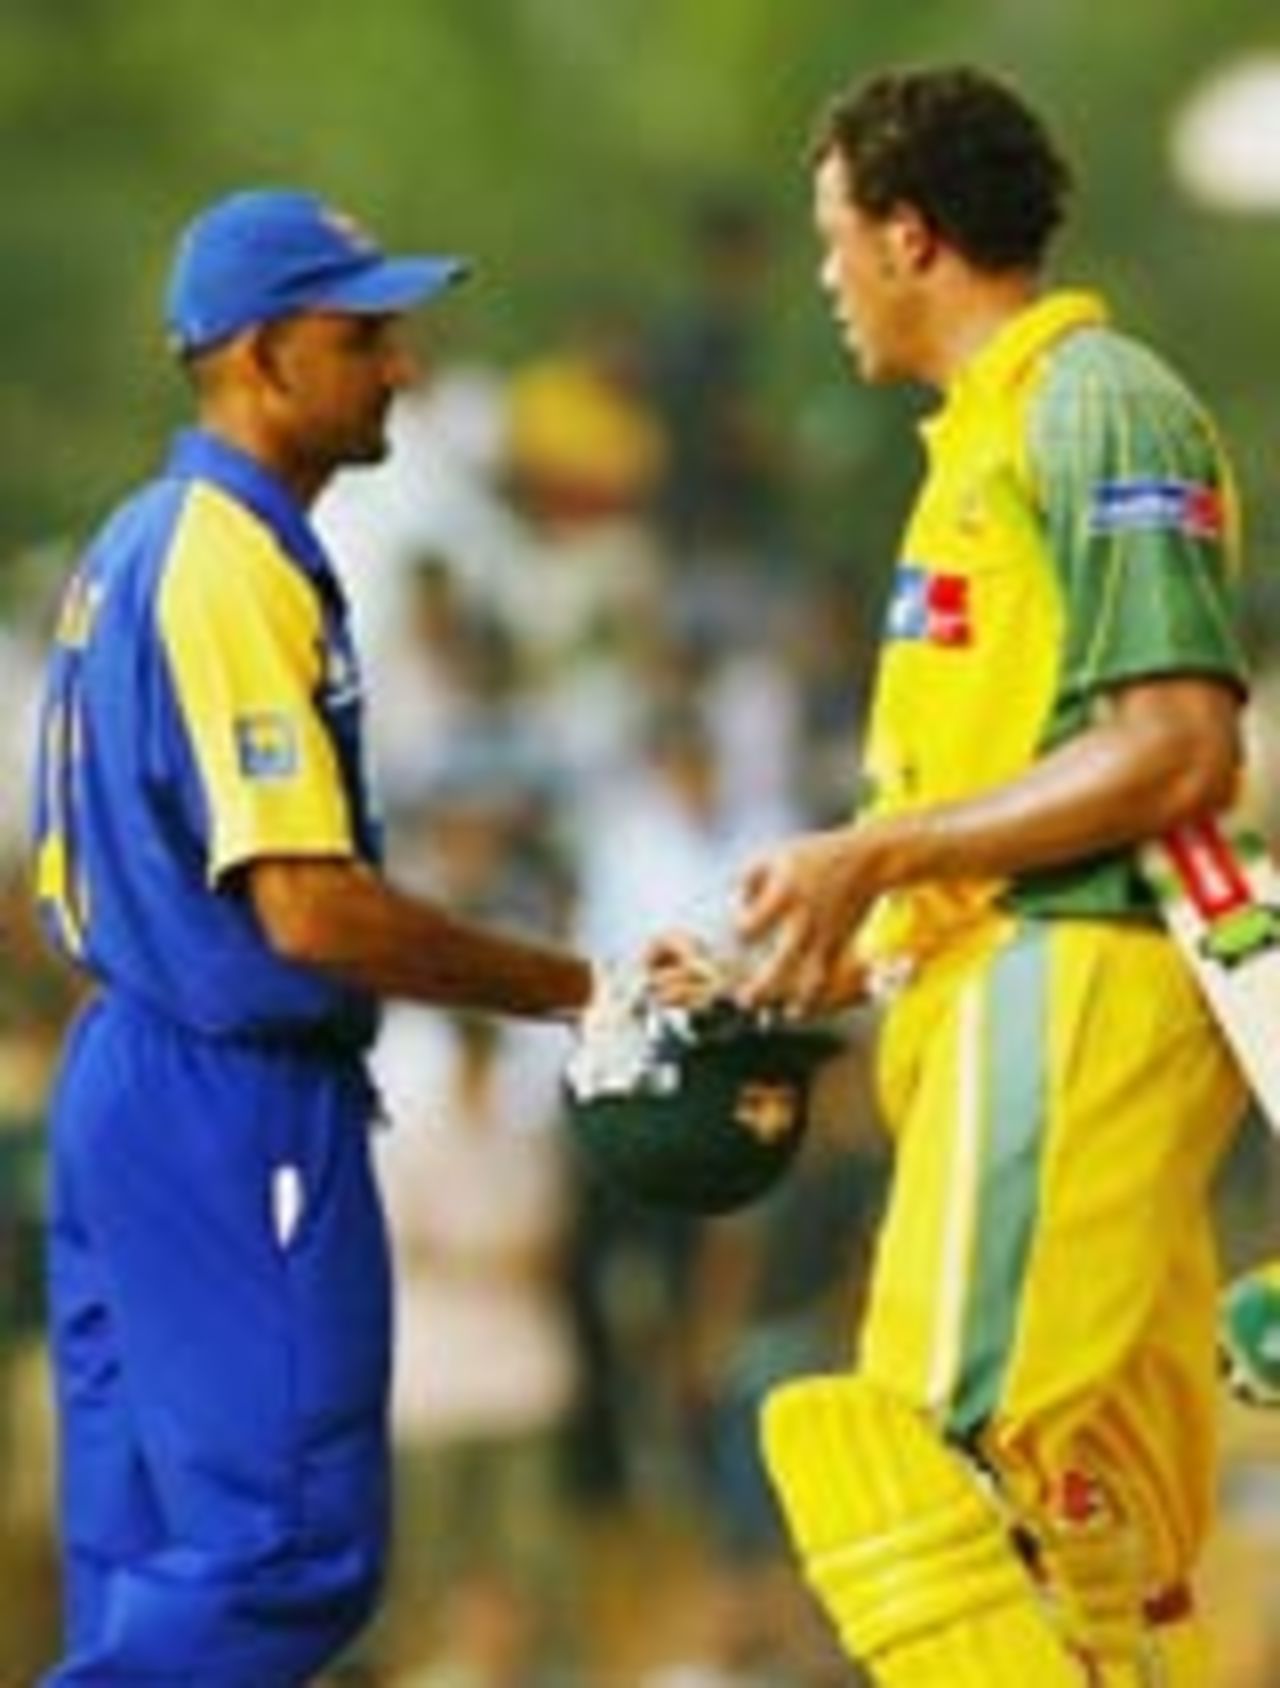 Andy Symonds was recalled after wrongly being adjudged lbw, Sri Lanka v Australia, 2nd ODI, Dambulla, February 22, 2004